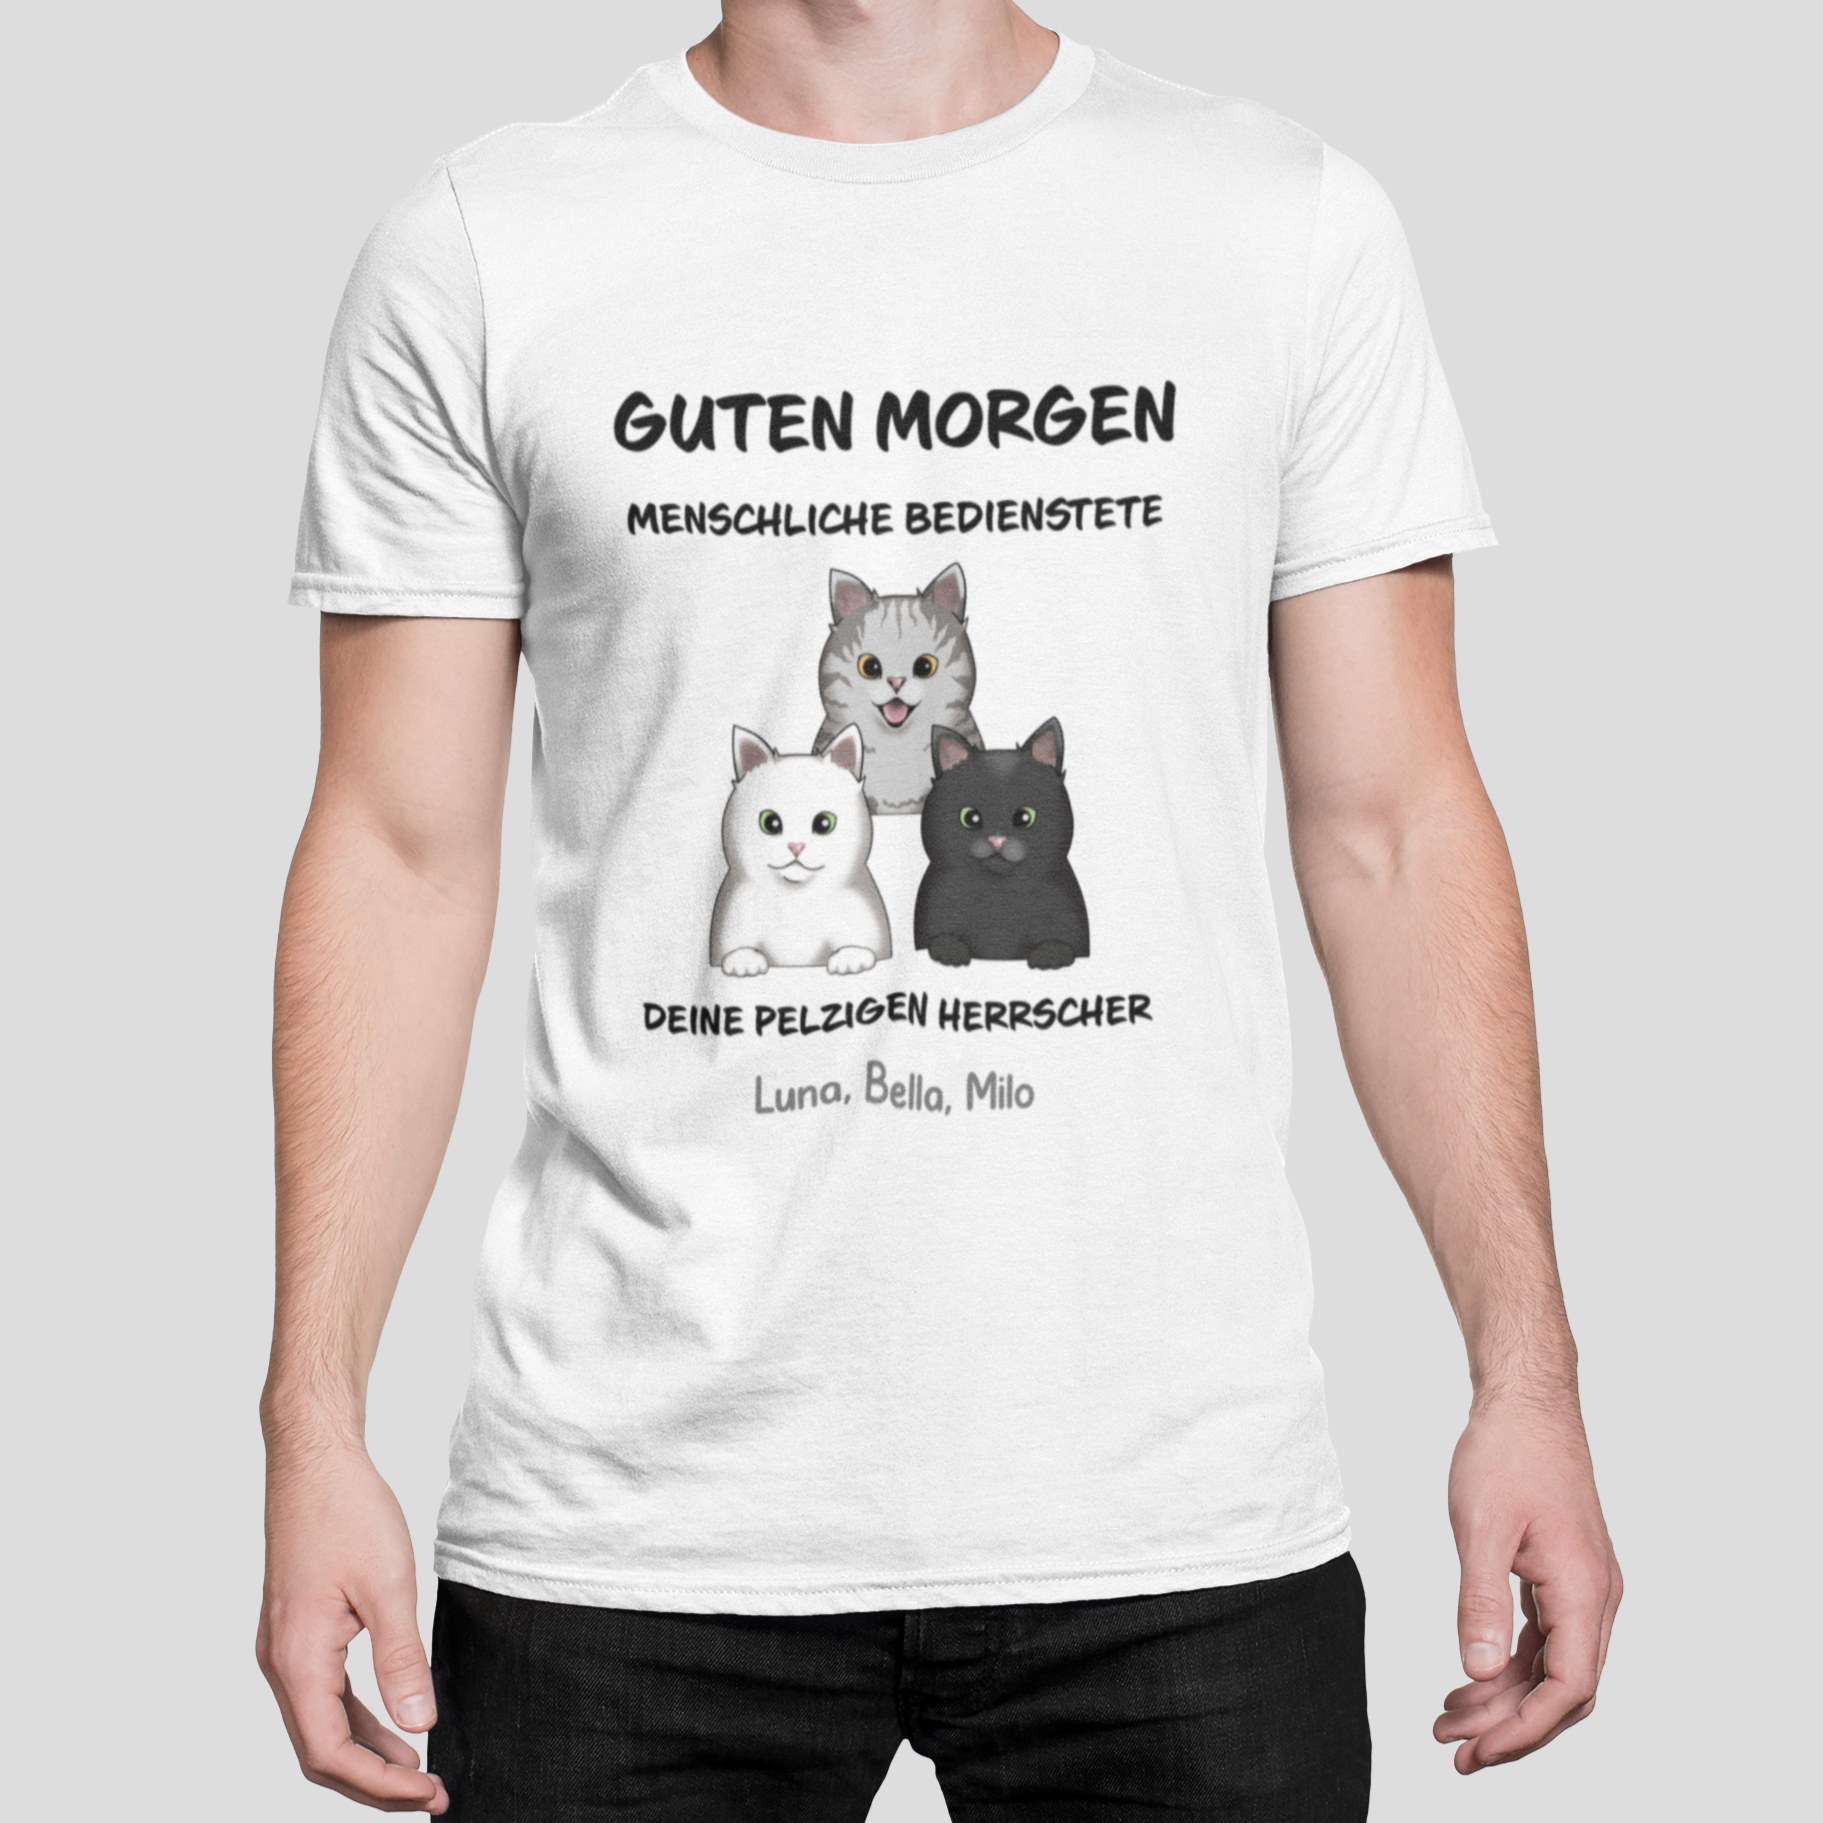 Man wearing a Personalized Menschliche Bedienstete T-Shirt with unique cat motif print.